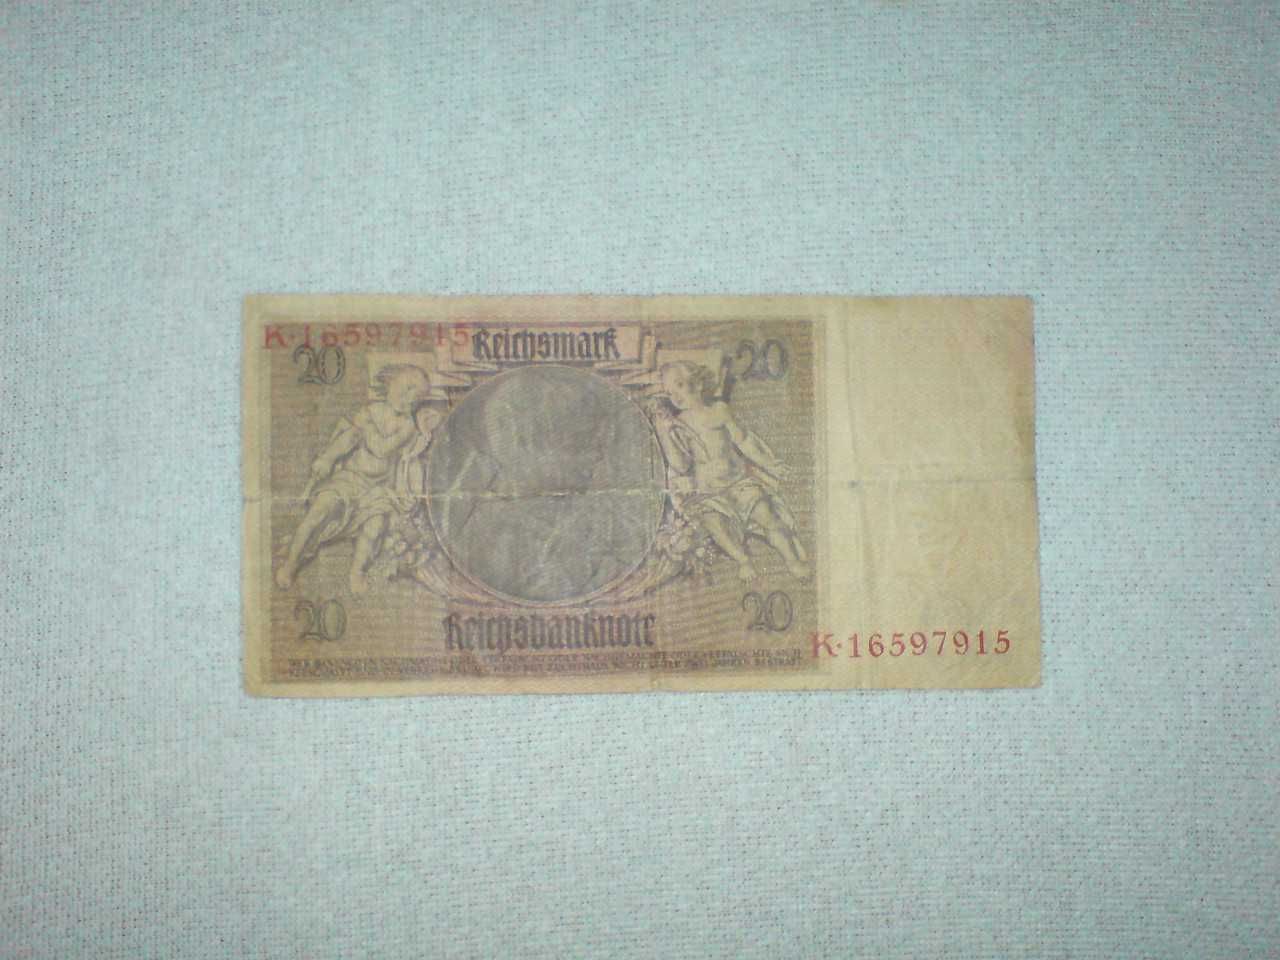 Banknot 20 Marek z 1929 roku.